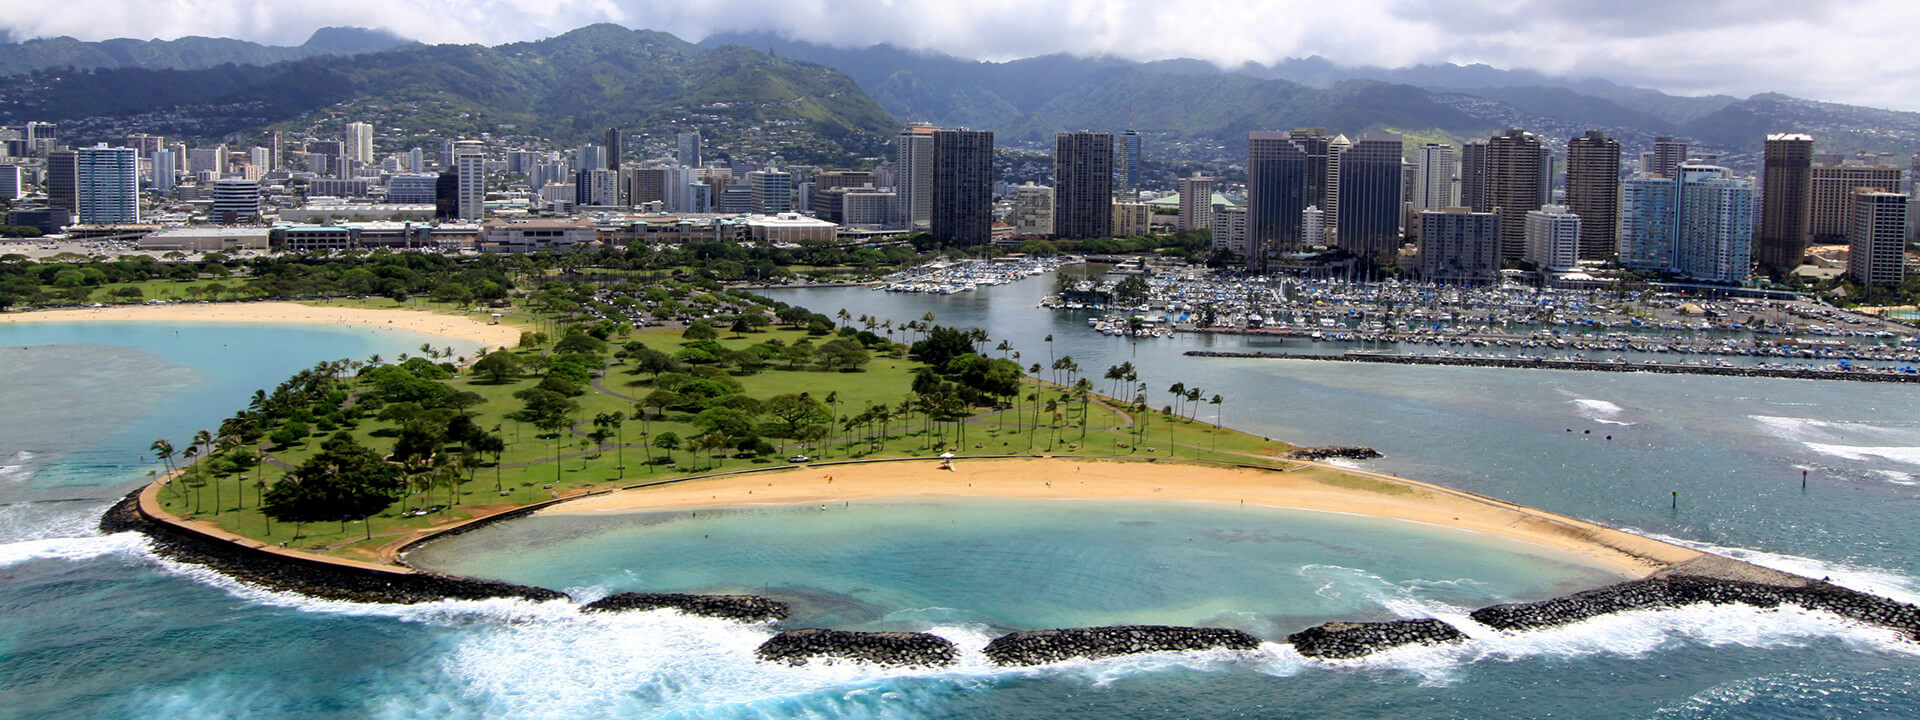 Ala Moana Beach Park - Things to Do in Honolulu